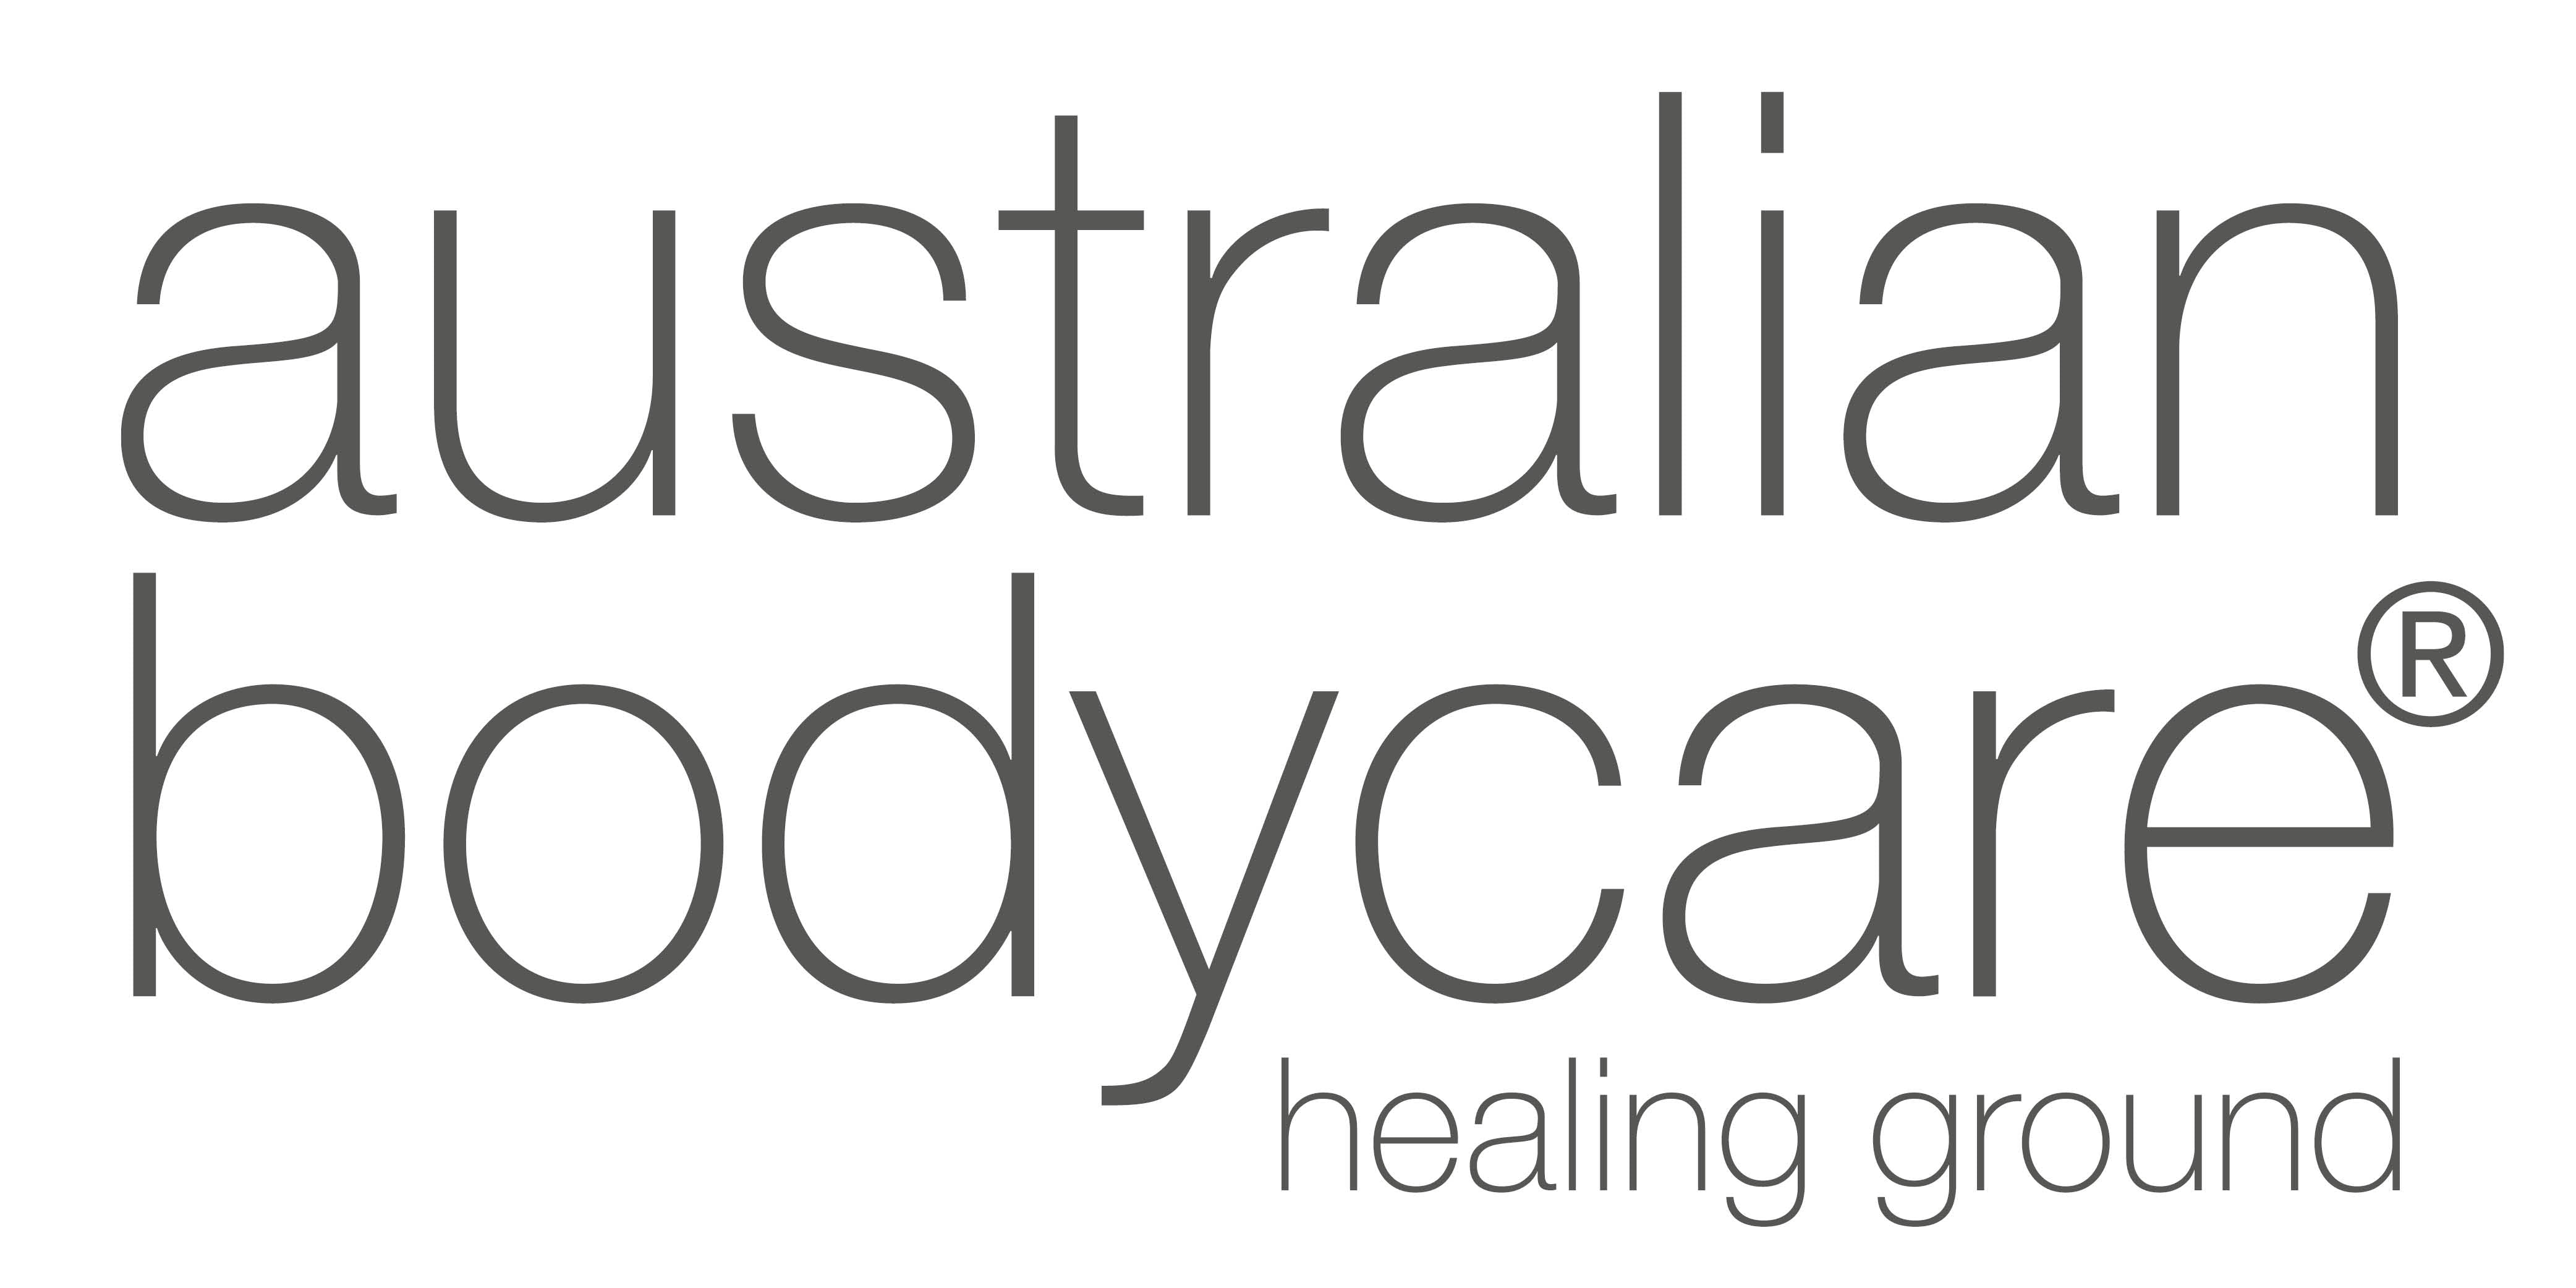 Australian Bodycare - Skin with Natural Tea Tree Oil